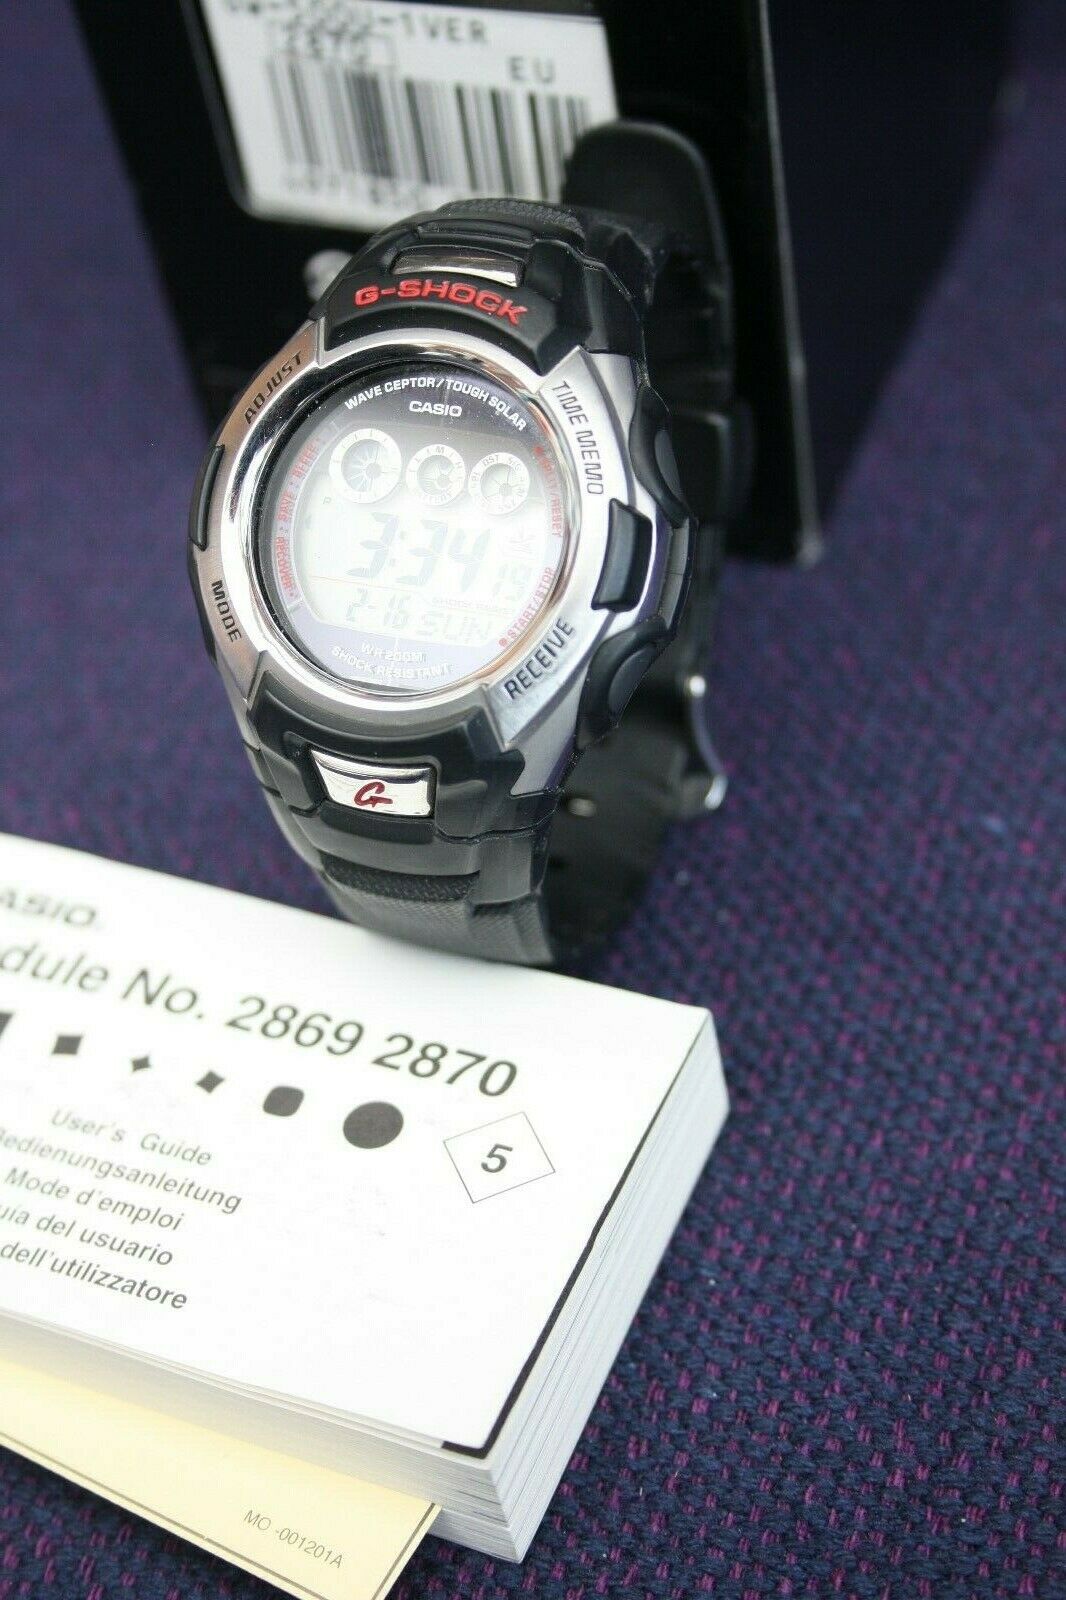 Casio G-Shock GW-500U-1VER Watch (Module 2870) Multi-band & Solar